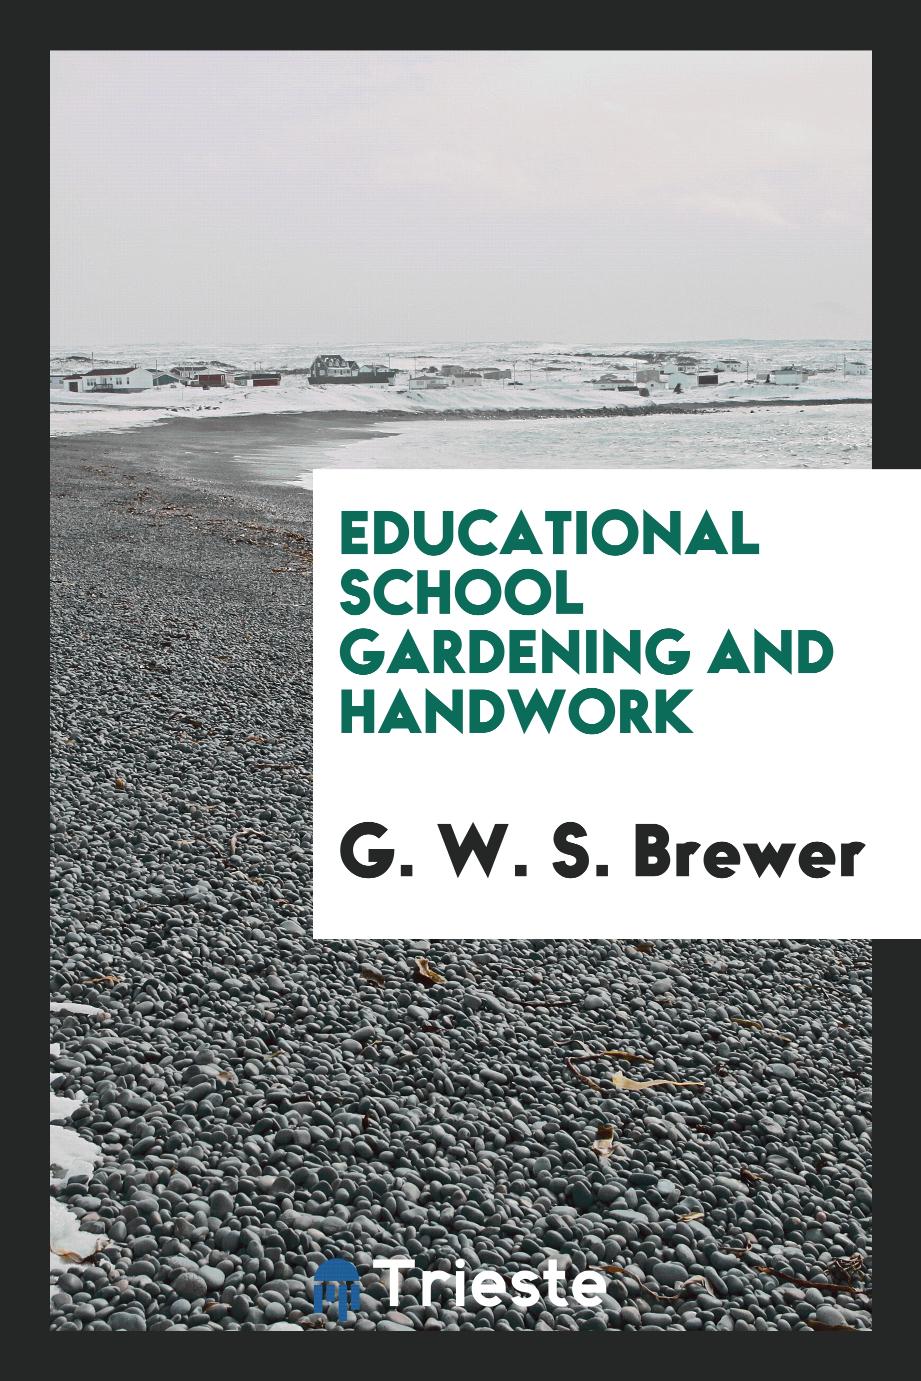 Educational school gardening and handwork